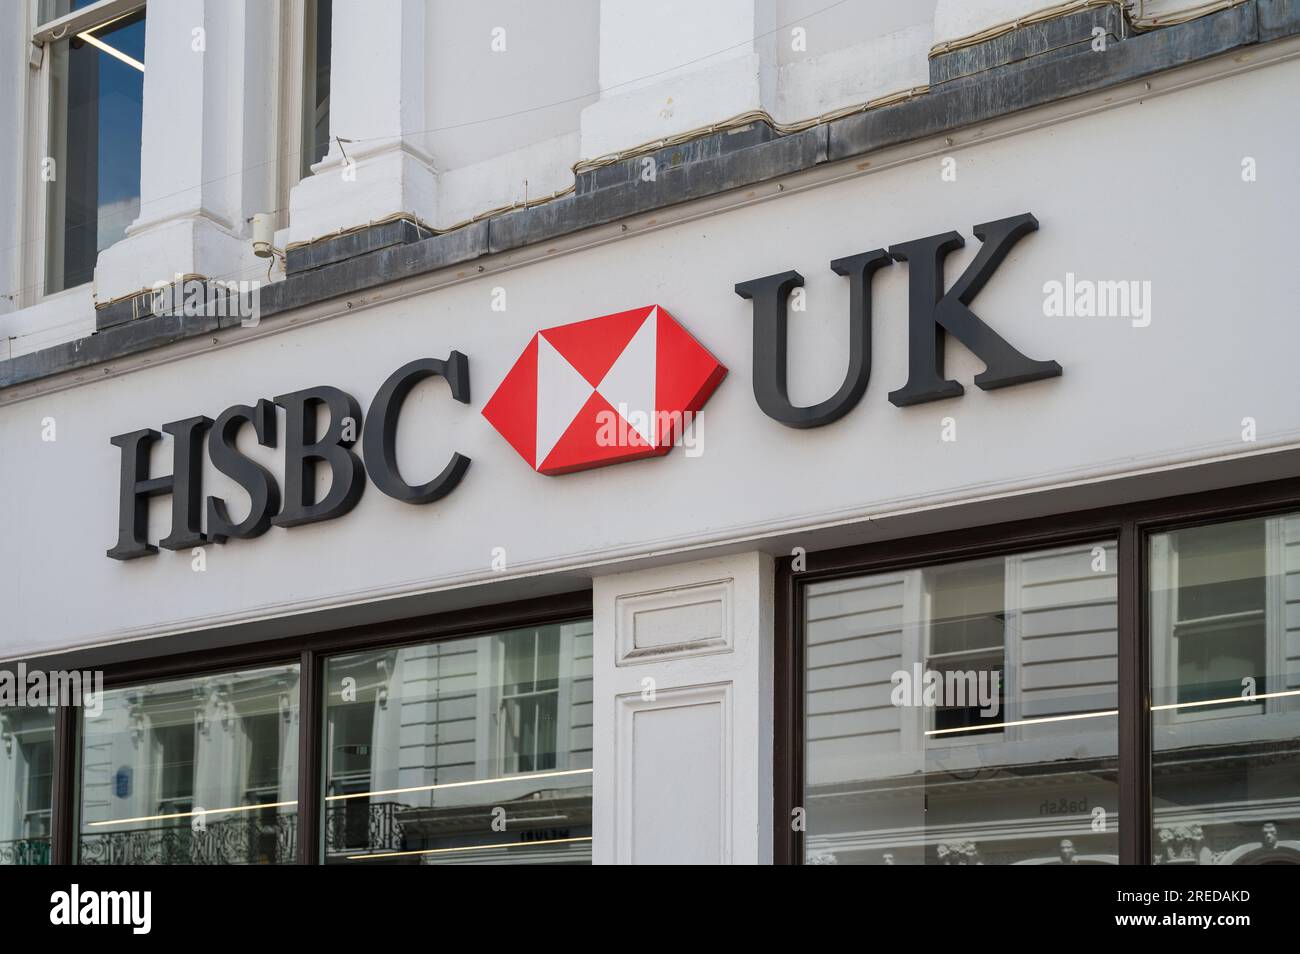 HSBC bank name and logo on bank building facade in King Street, Covent Garden, London, England, UK Stock Photo